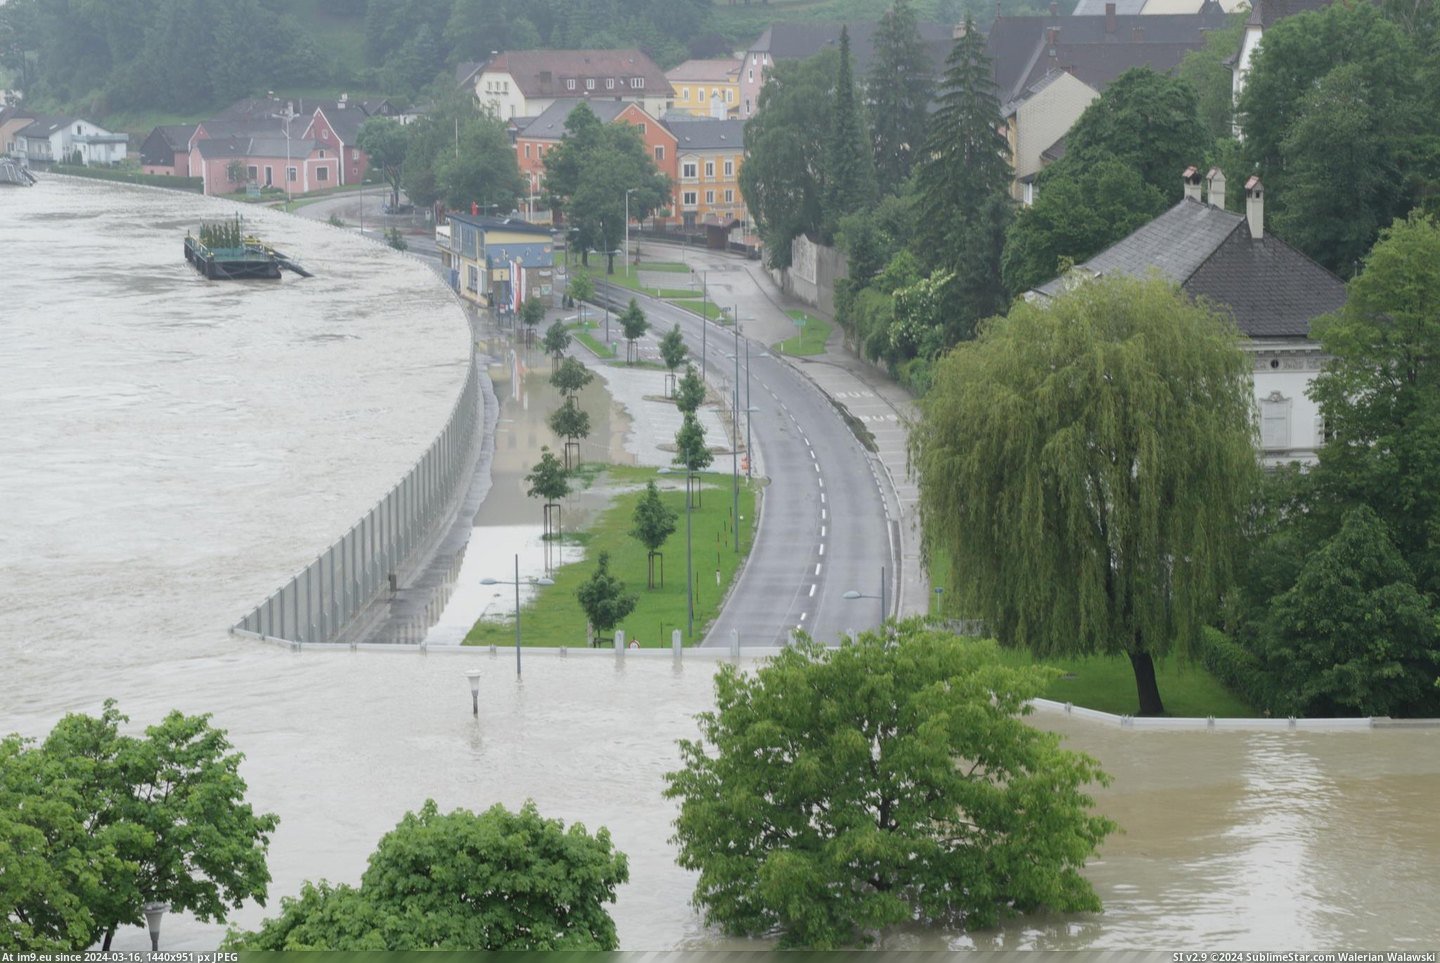 #Amazing #Wall #Engineering #Feat #Flood #Austria #Mobile [Pics] Mobile flood wall in Austria, amazing feat of engineering. Pic. (Изображение из альбом My r/PICS favs))